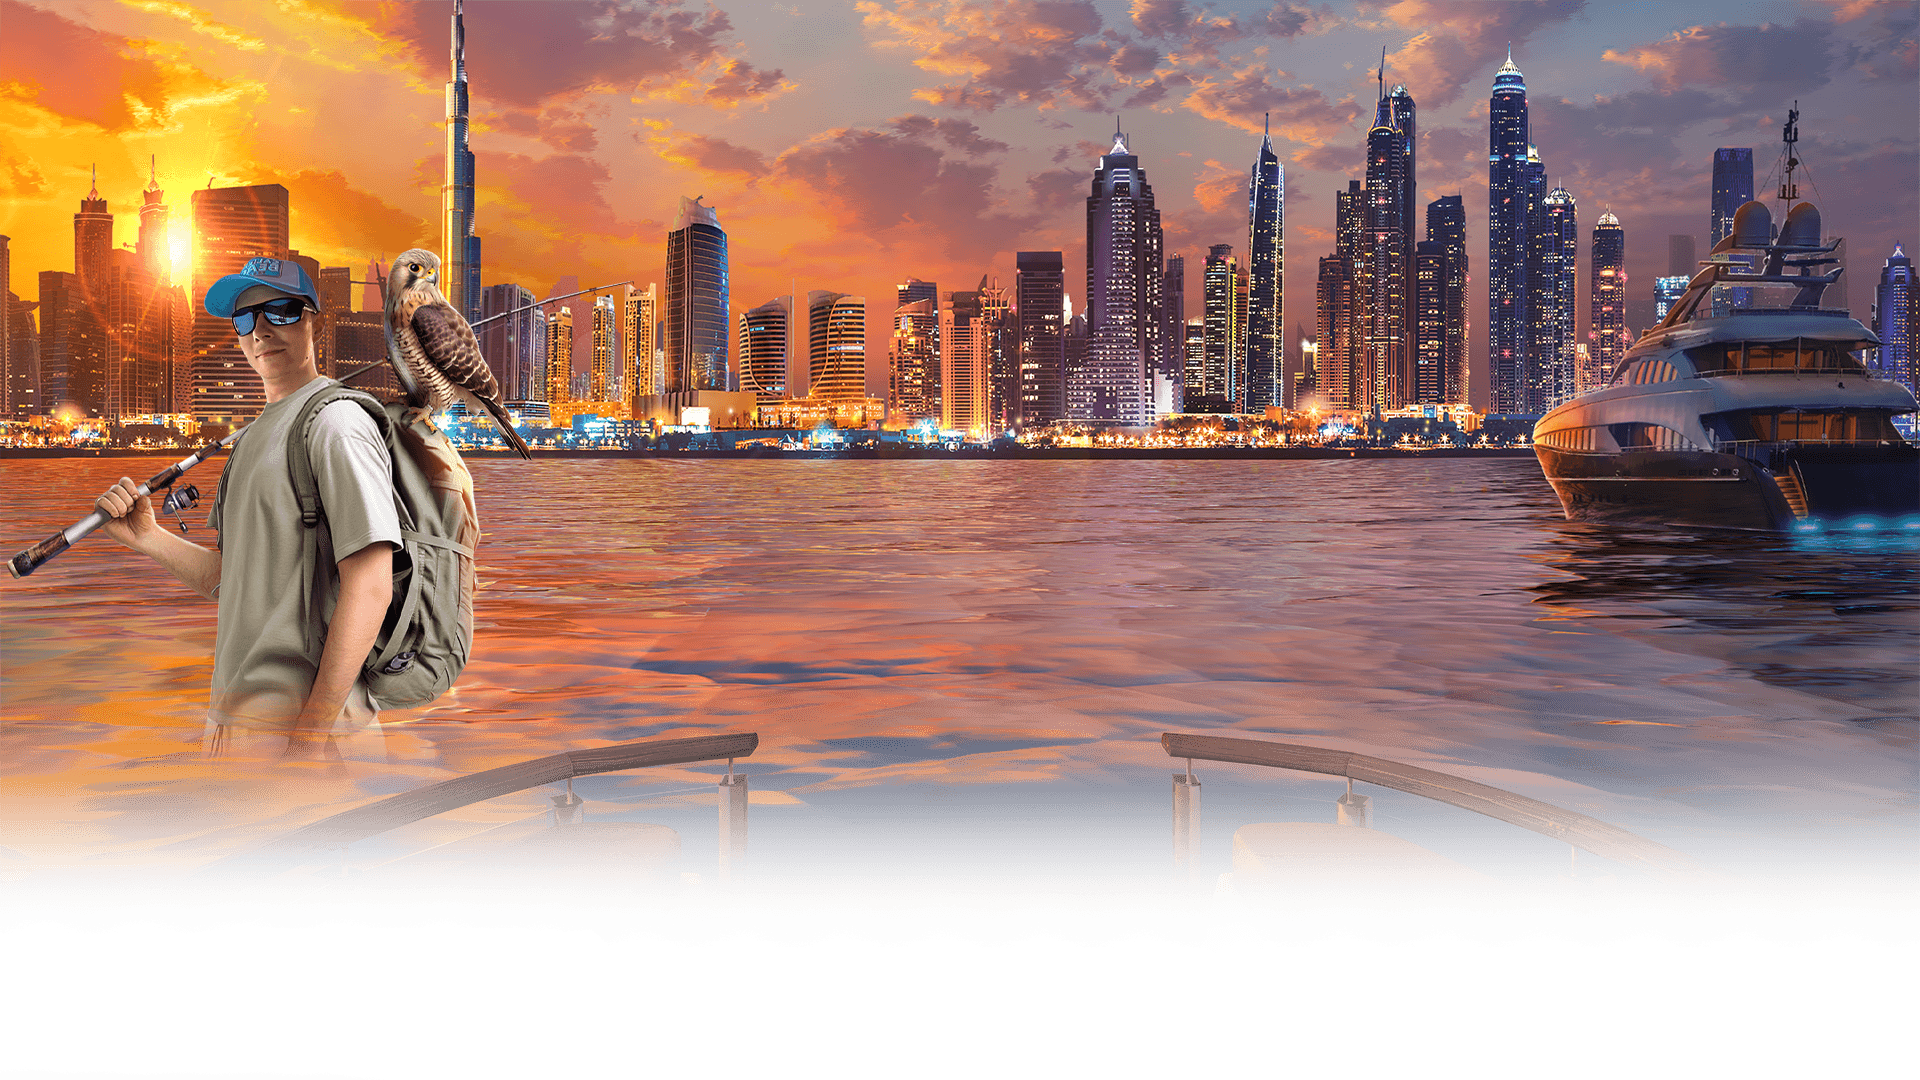 Dubai: A Fisherman’s Oasis in the Desert